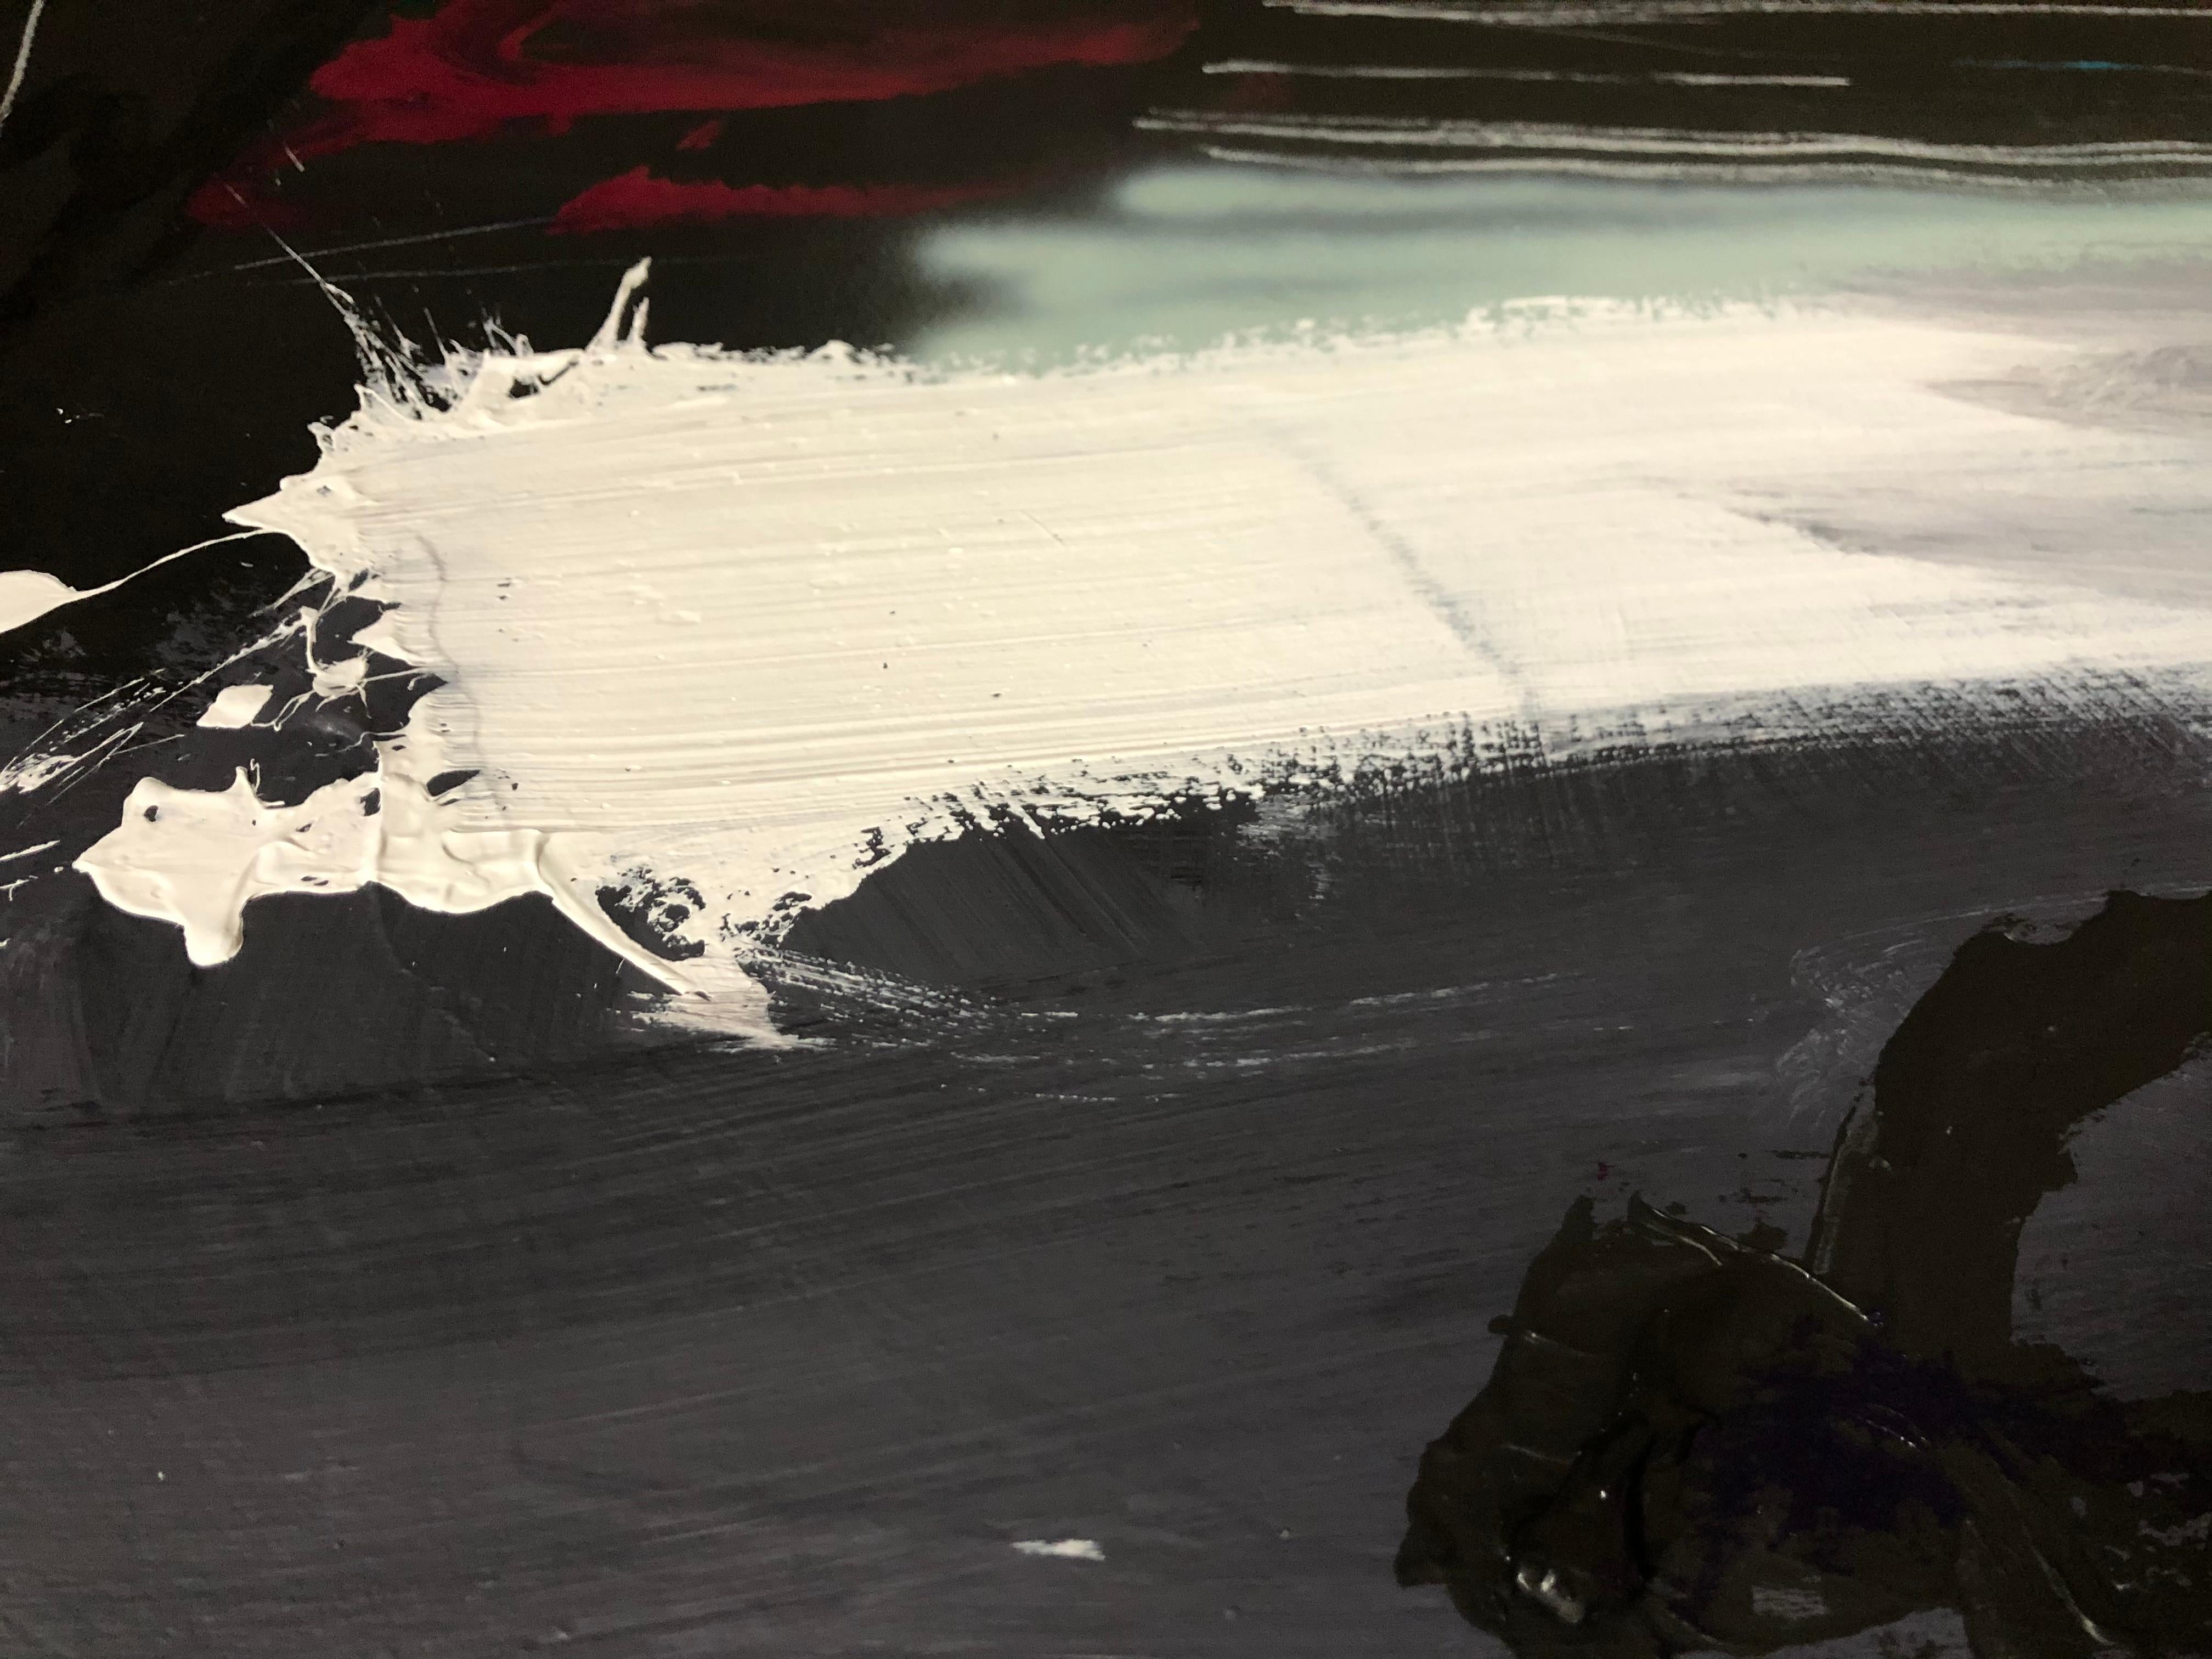 MyanMyanMyan (Abstract painting) - Black Abstract Painting by Nathan Paddison